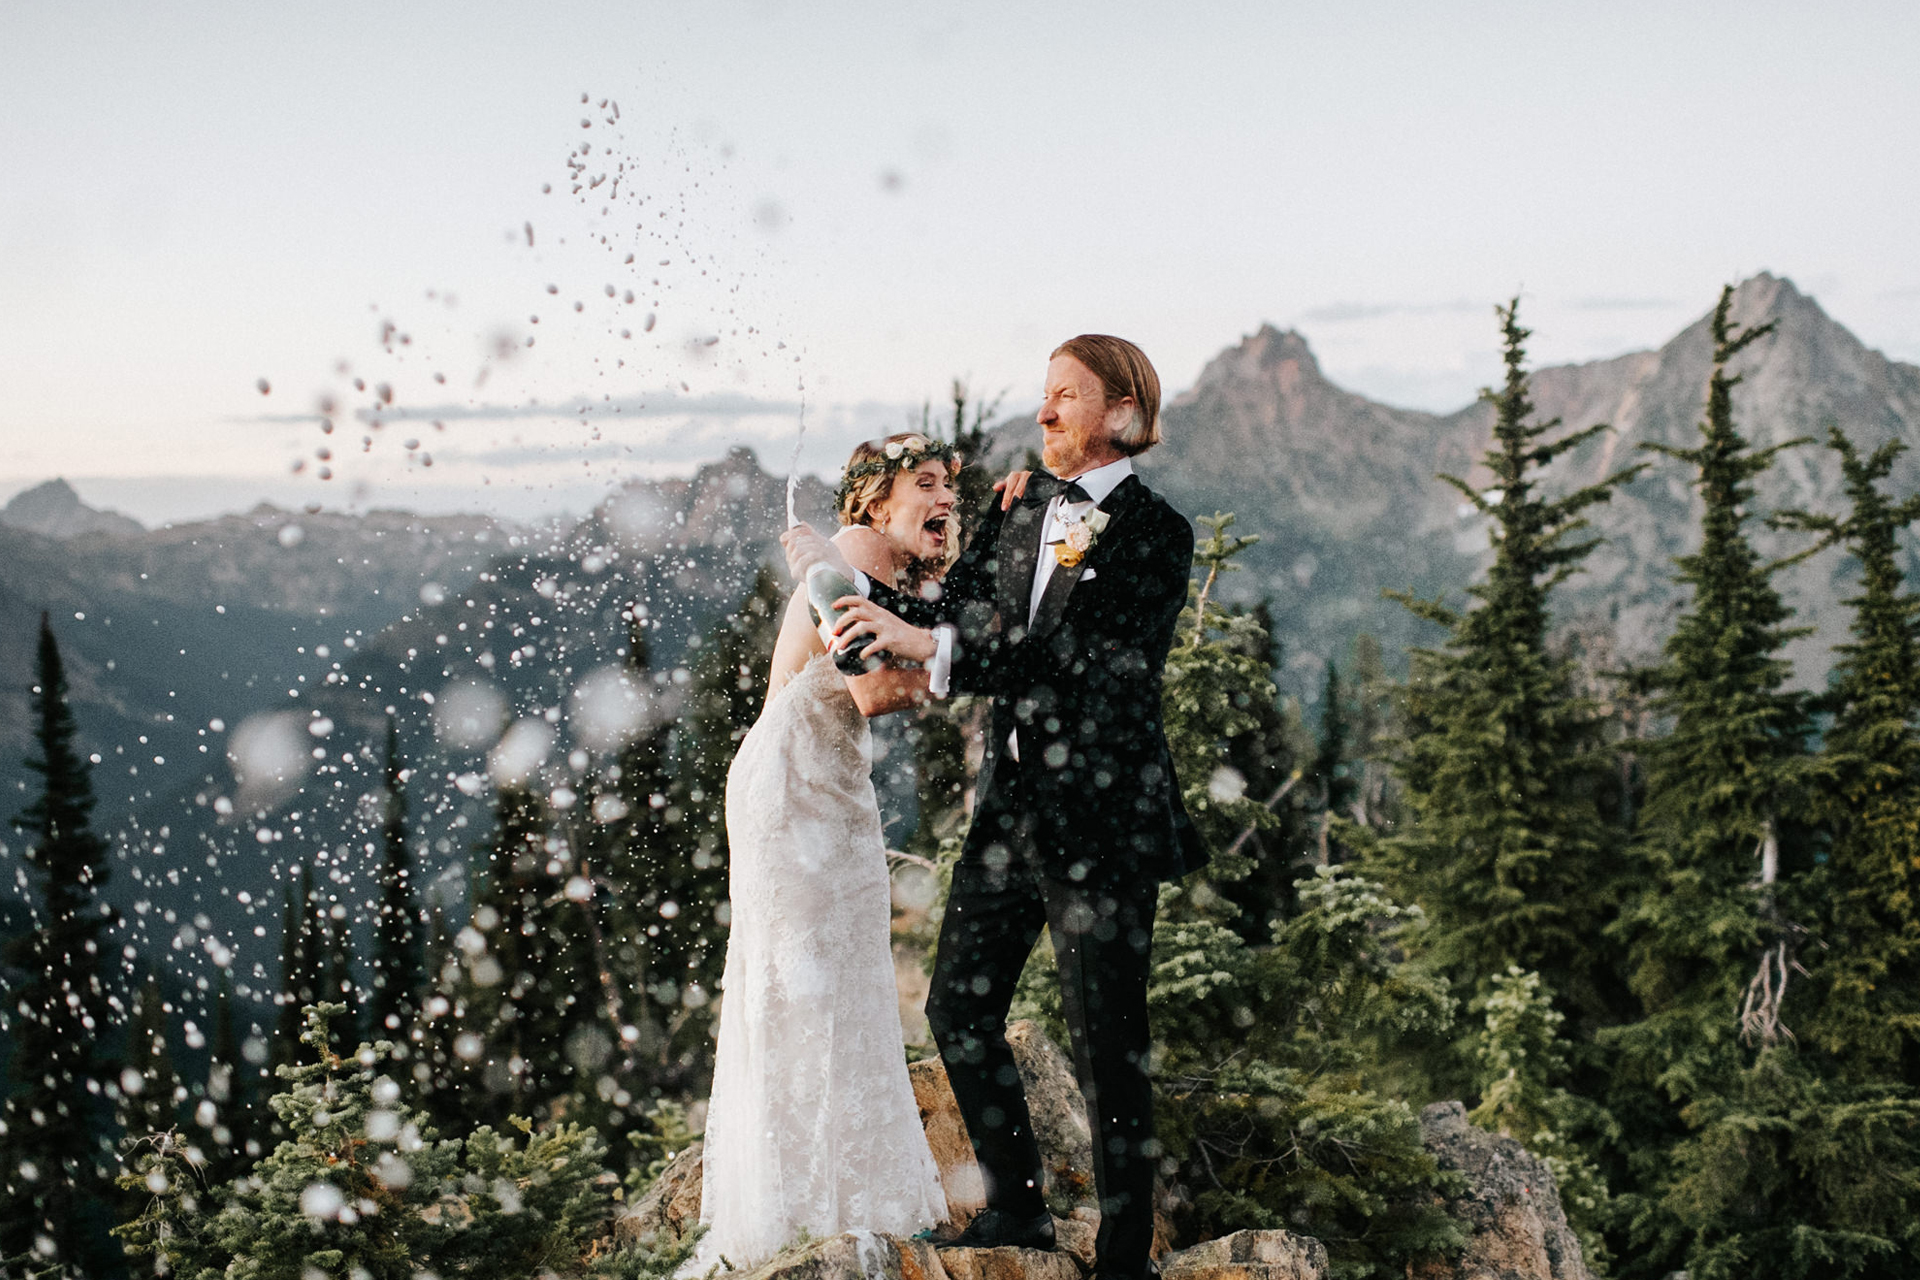 Lake Como Wedding Photographer: Capturing Eternal Love in a Breathtaking View